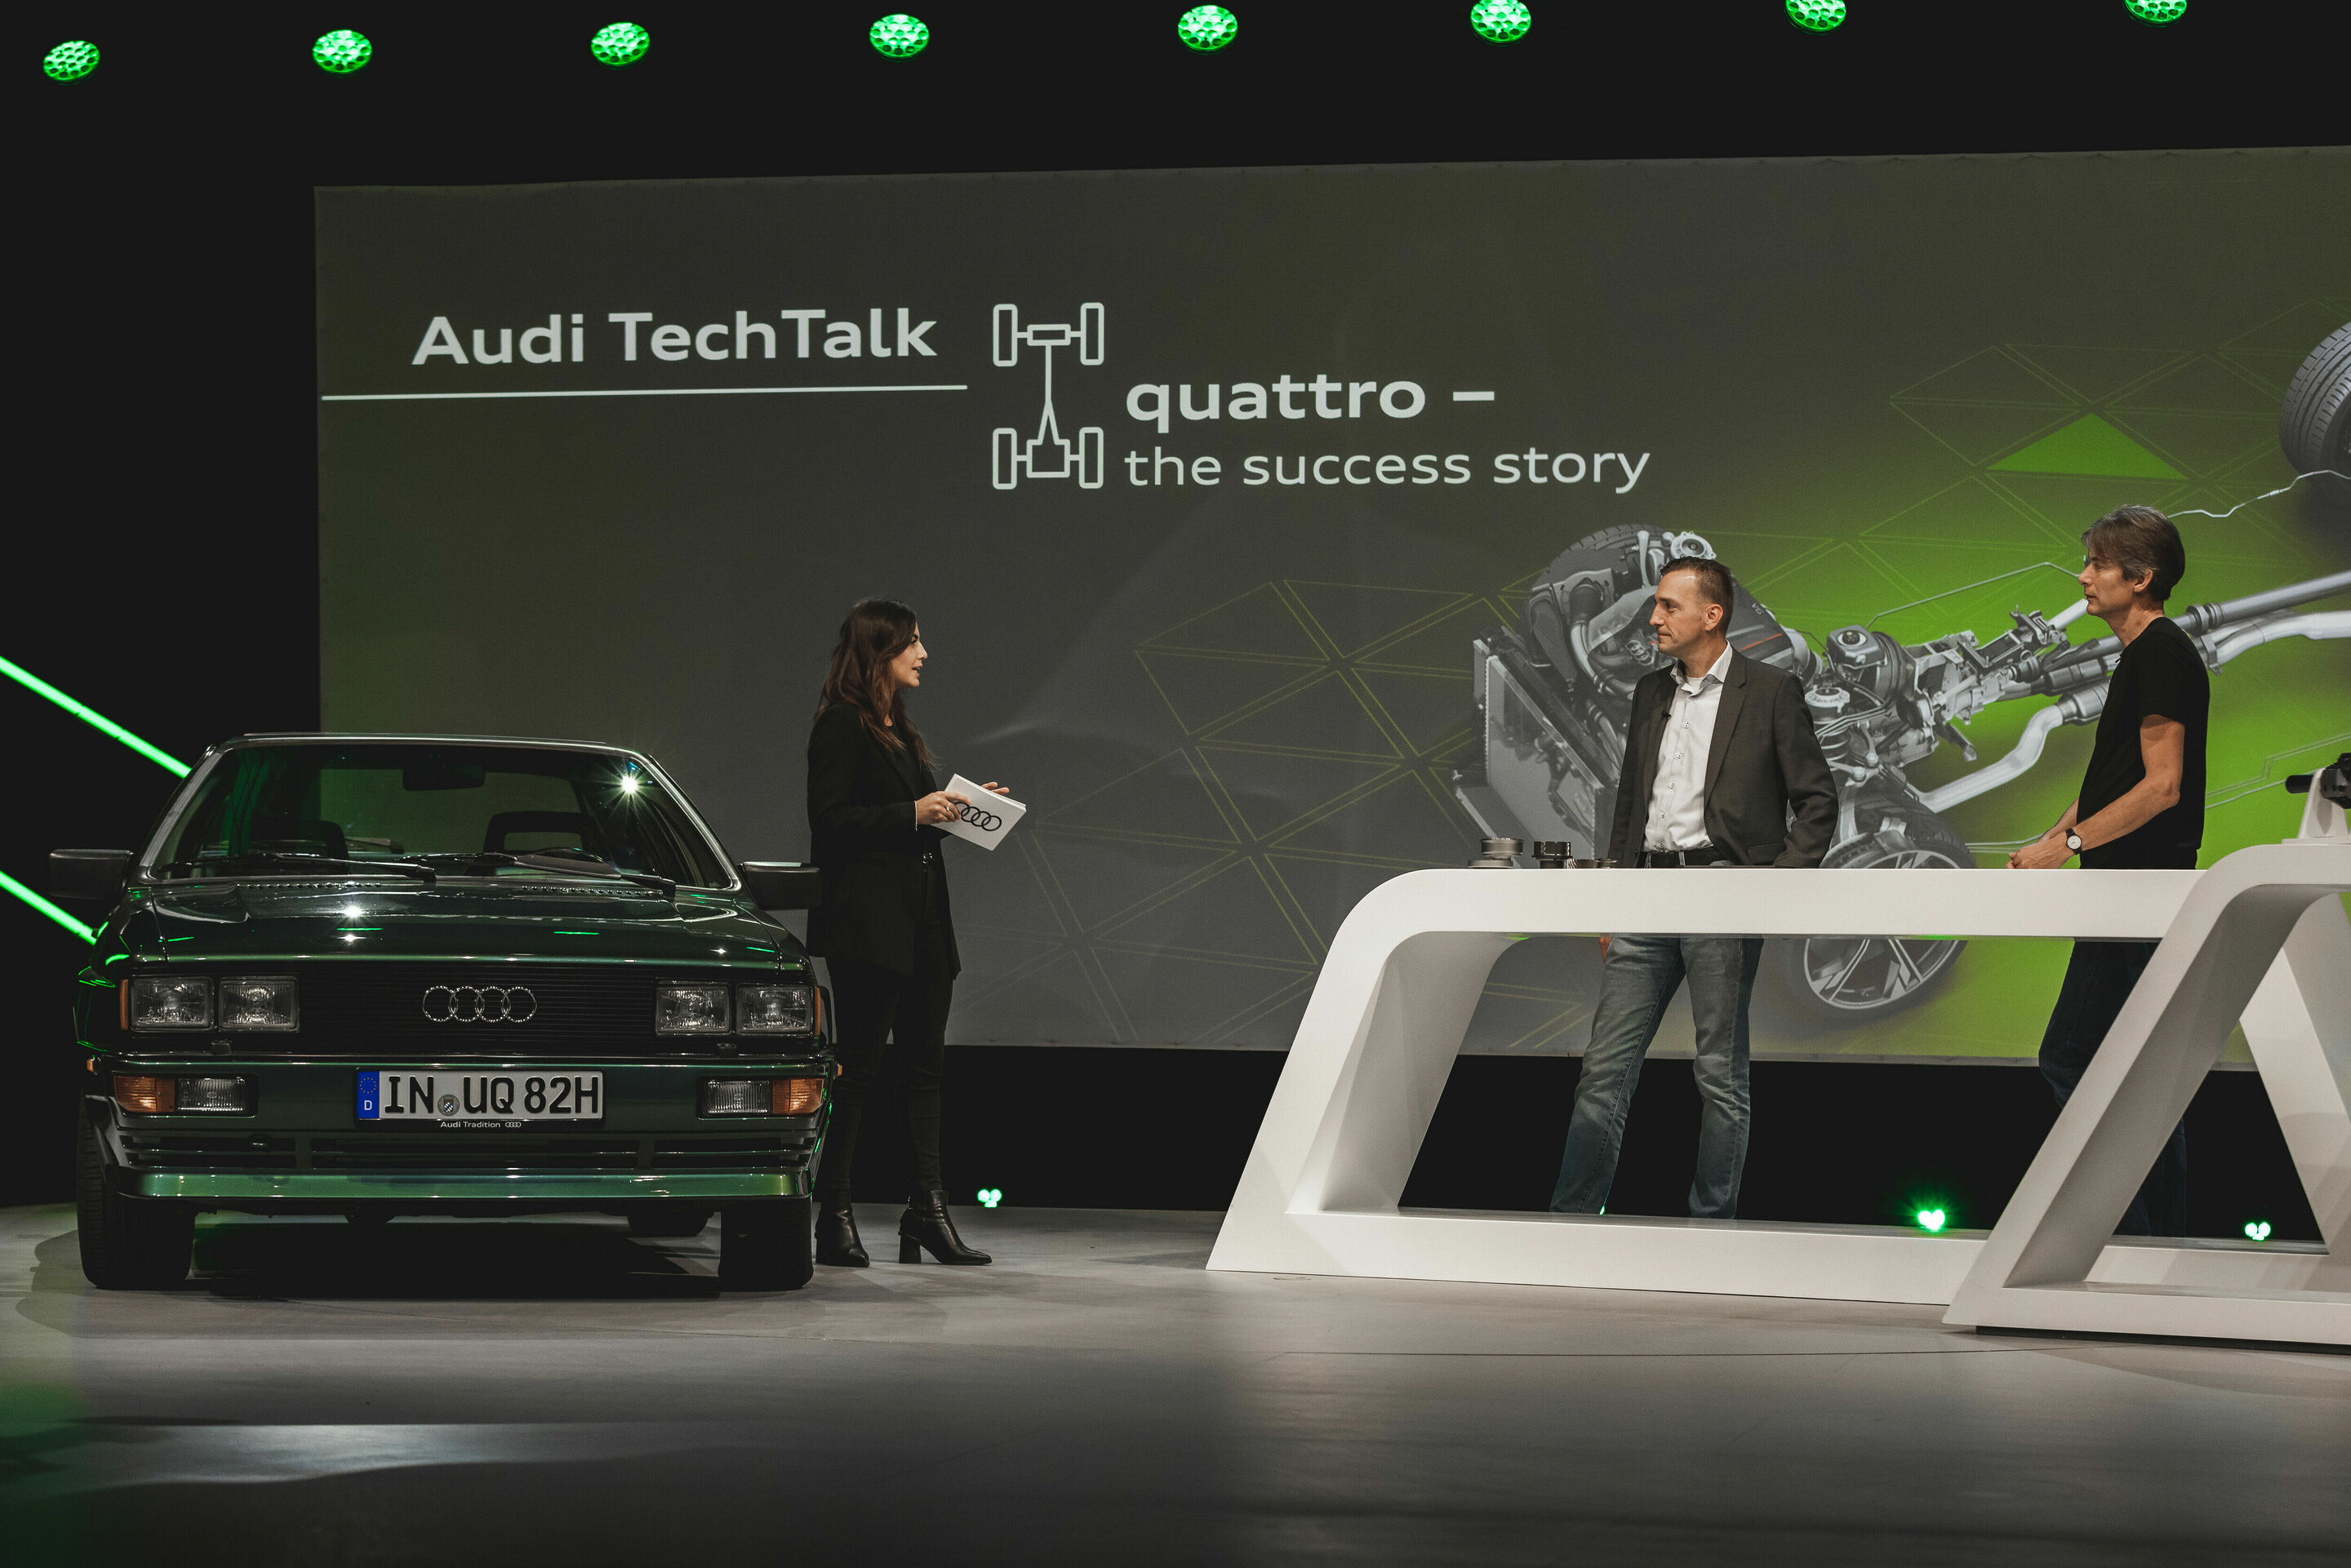 TechTalk quattro – the winning technology